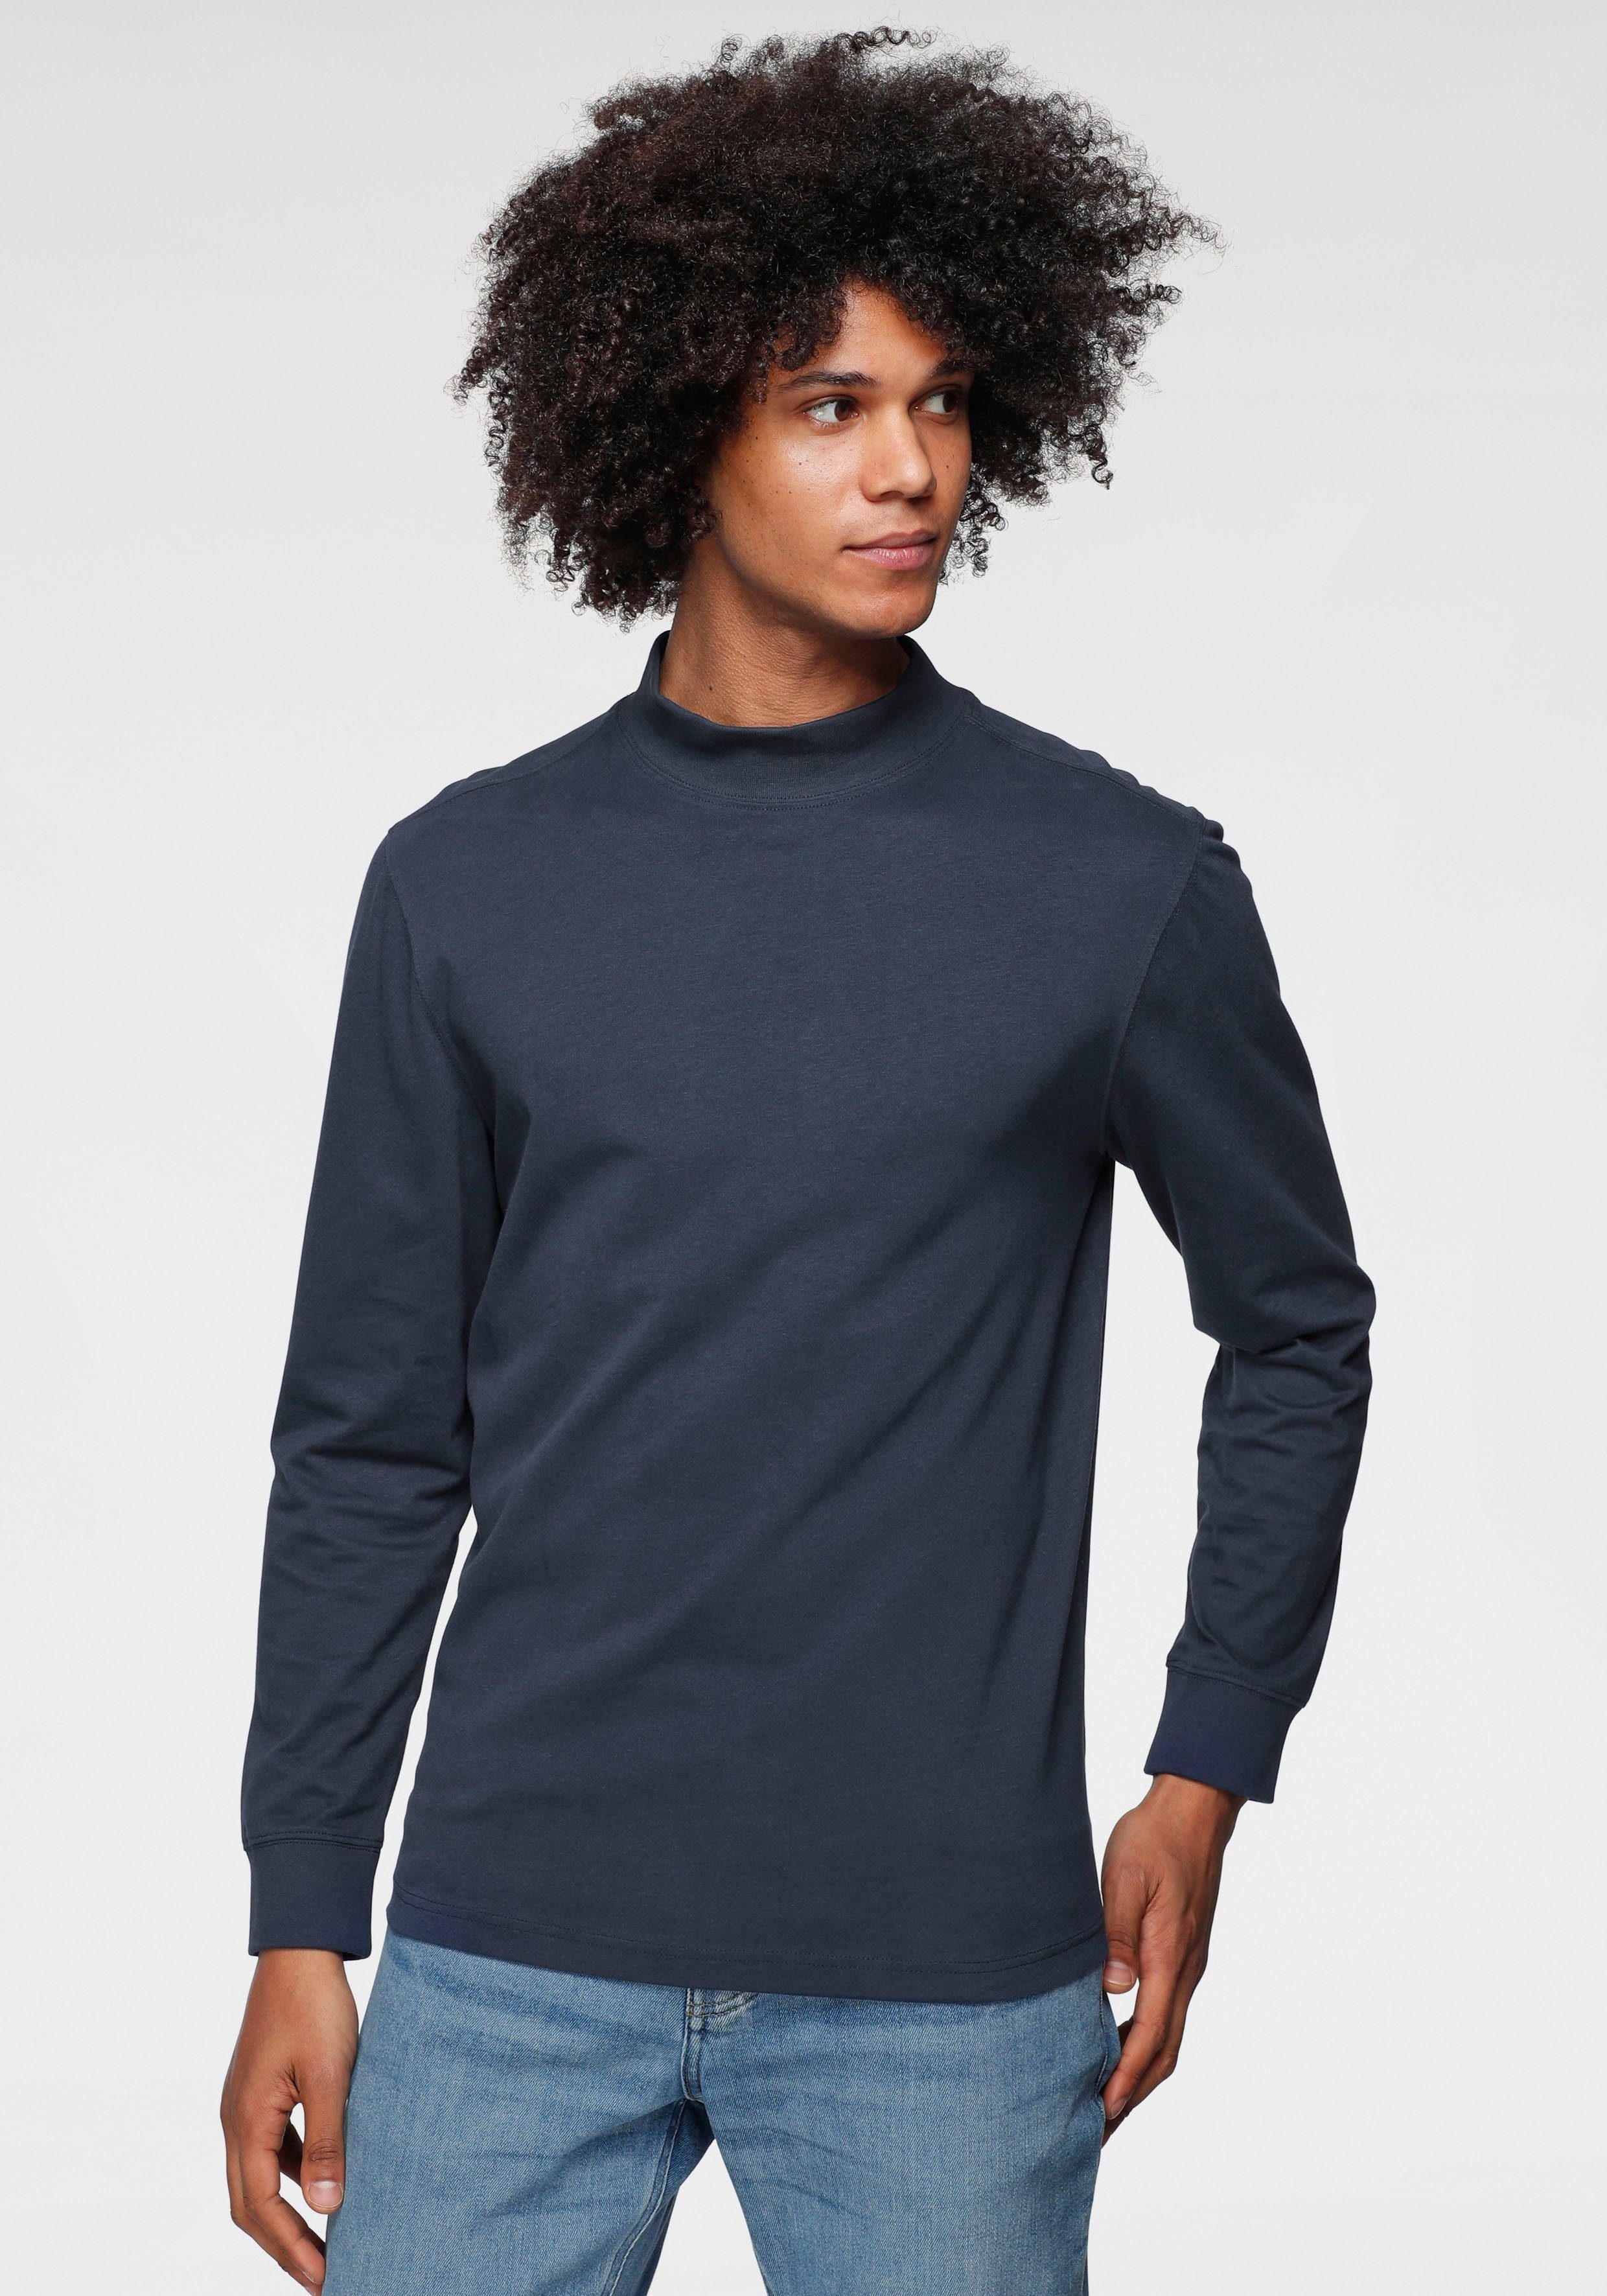 OTTO products Langarmshirt aus Bio-Baumwolle marine | Shirts